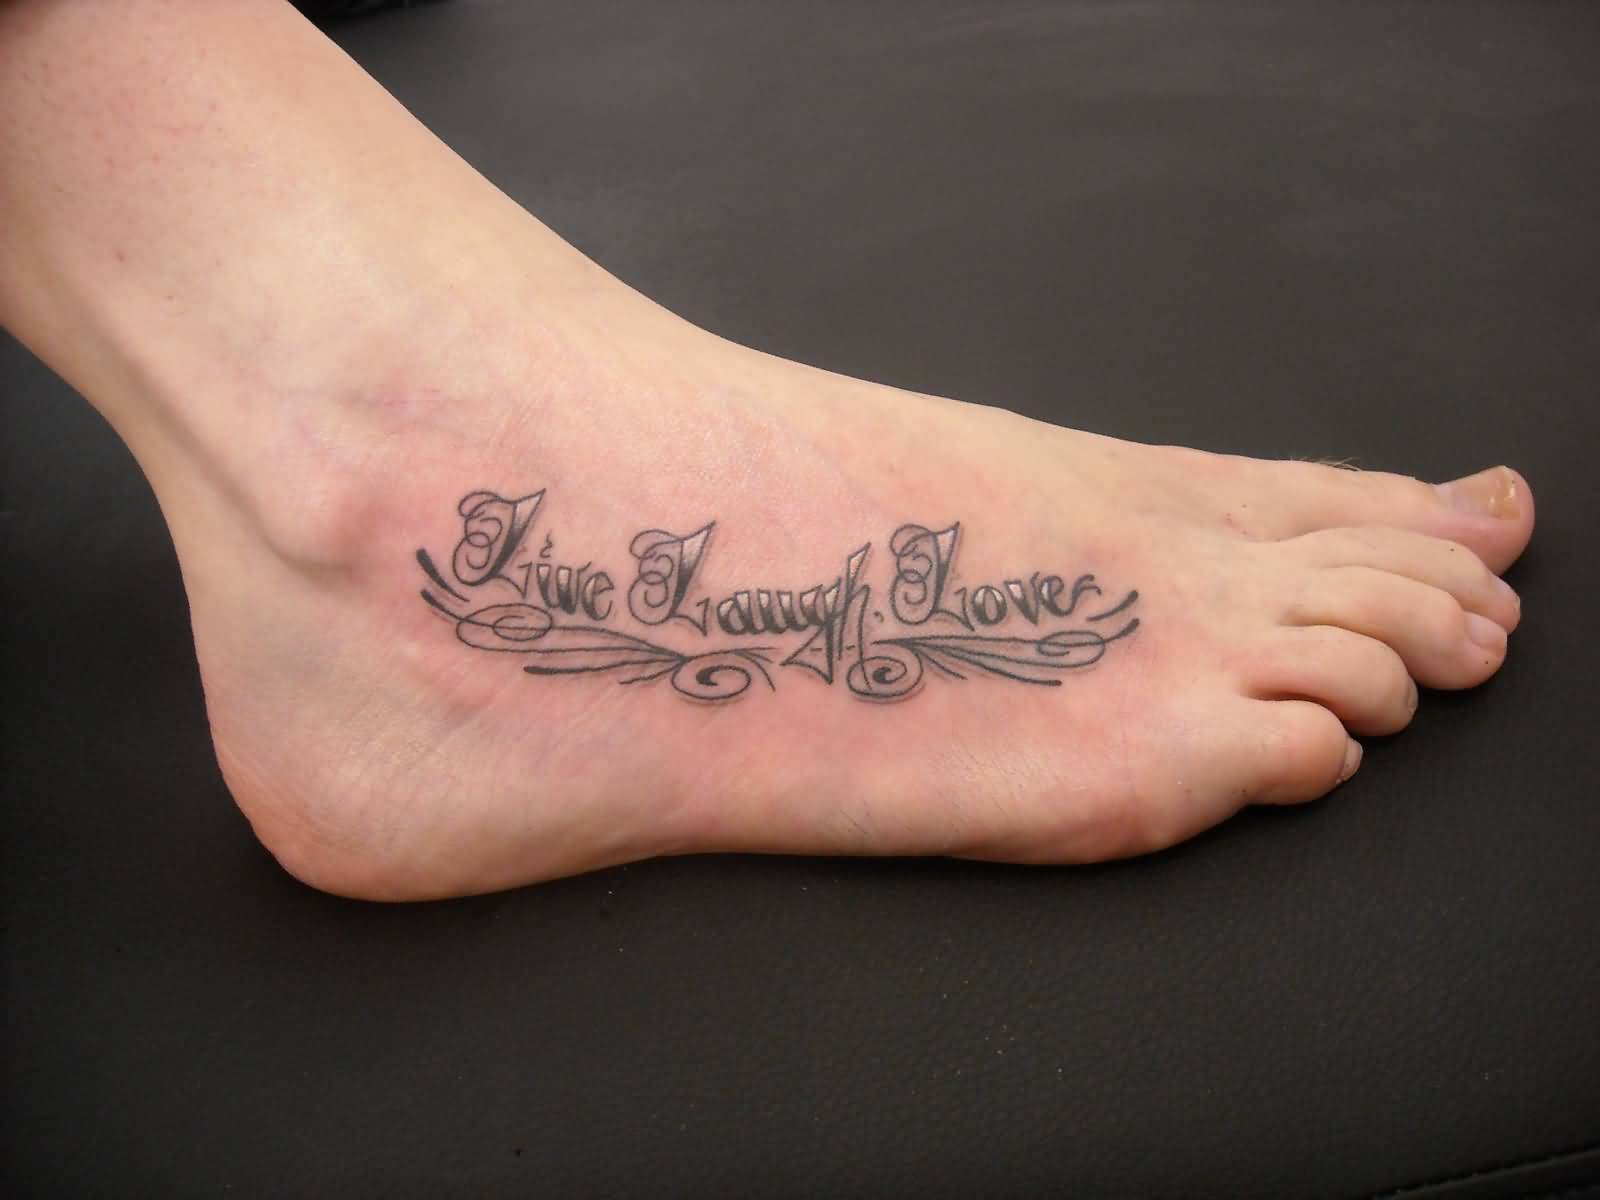 Beautiful Live Laugh Love Tattoo On Foot